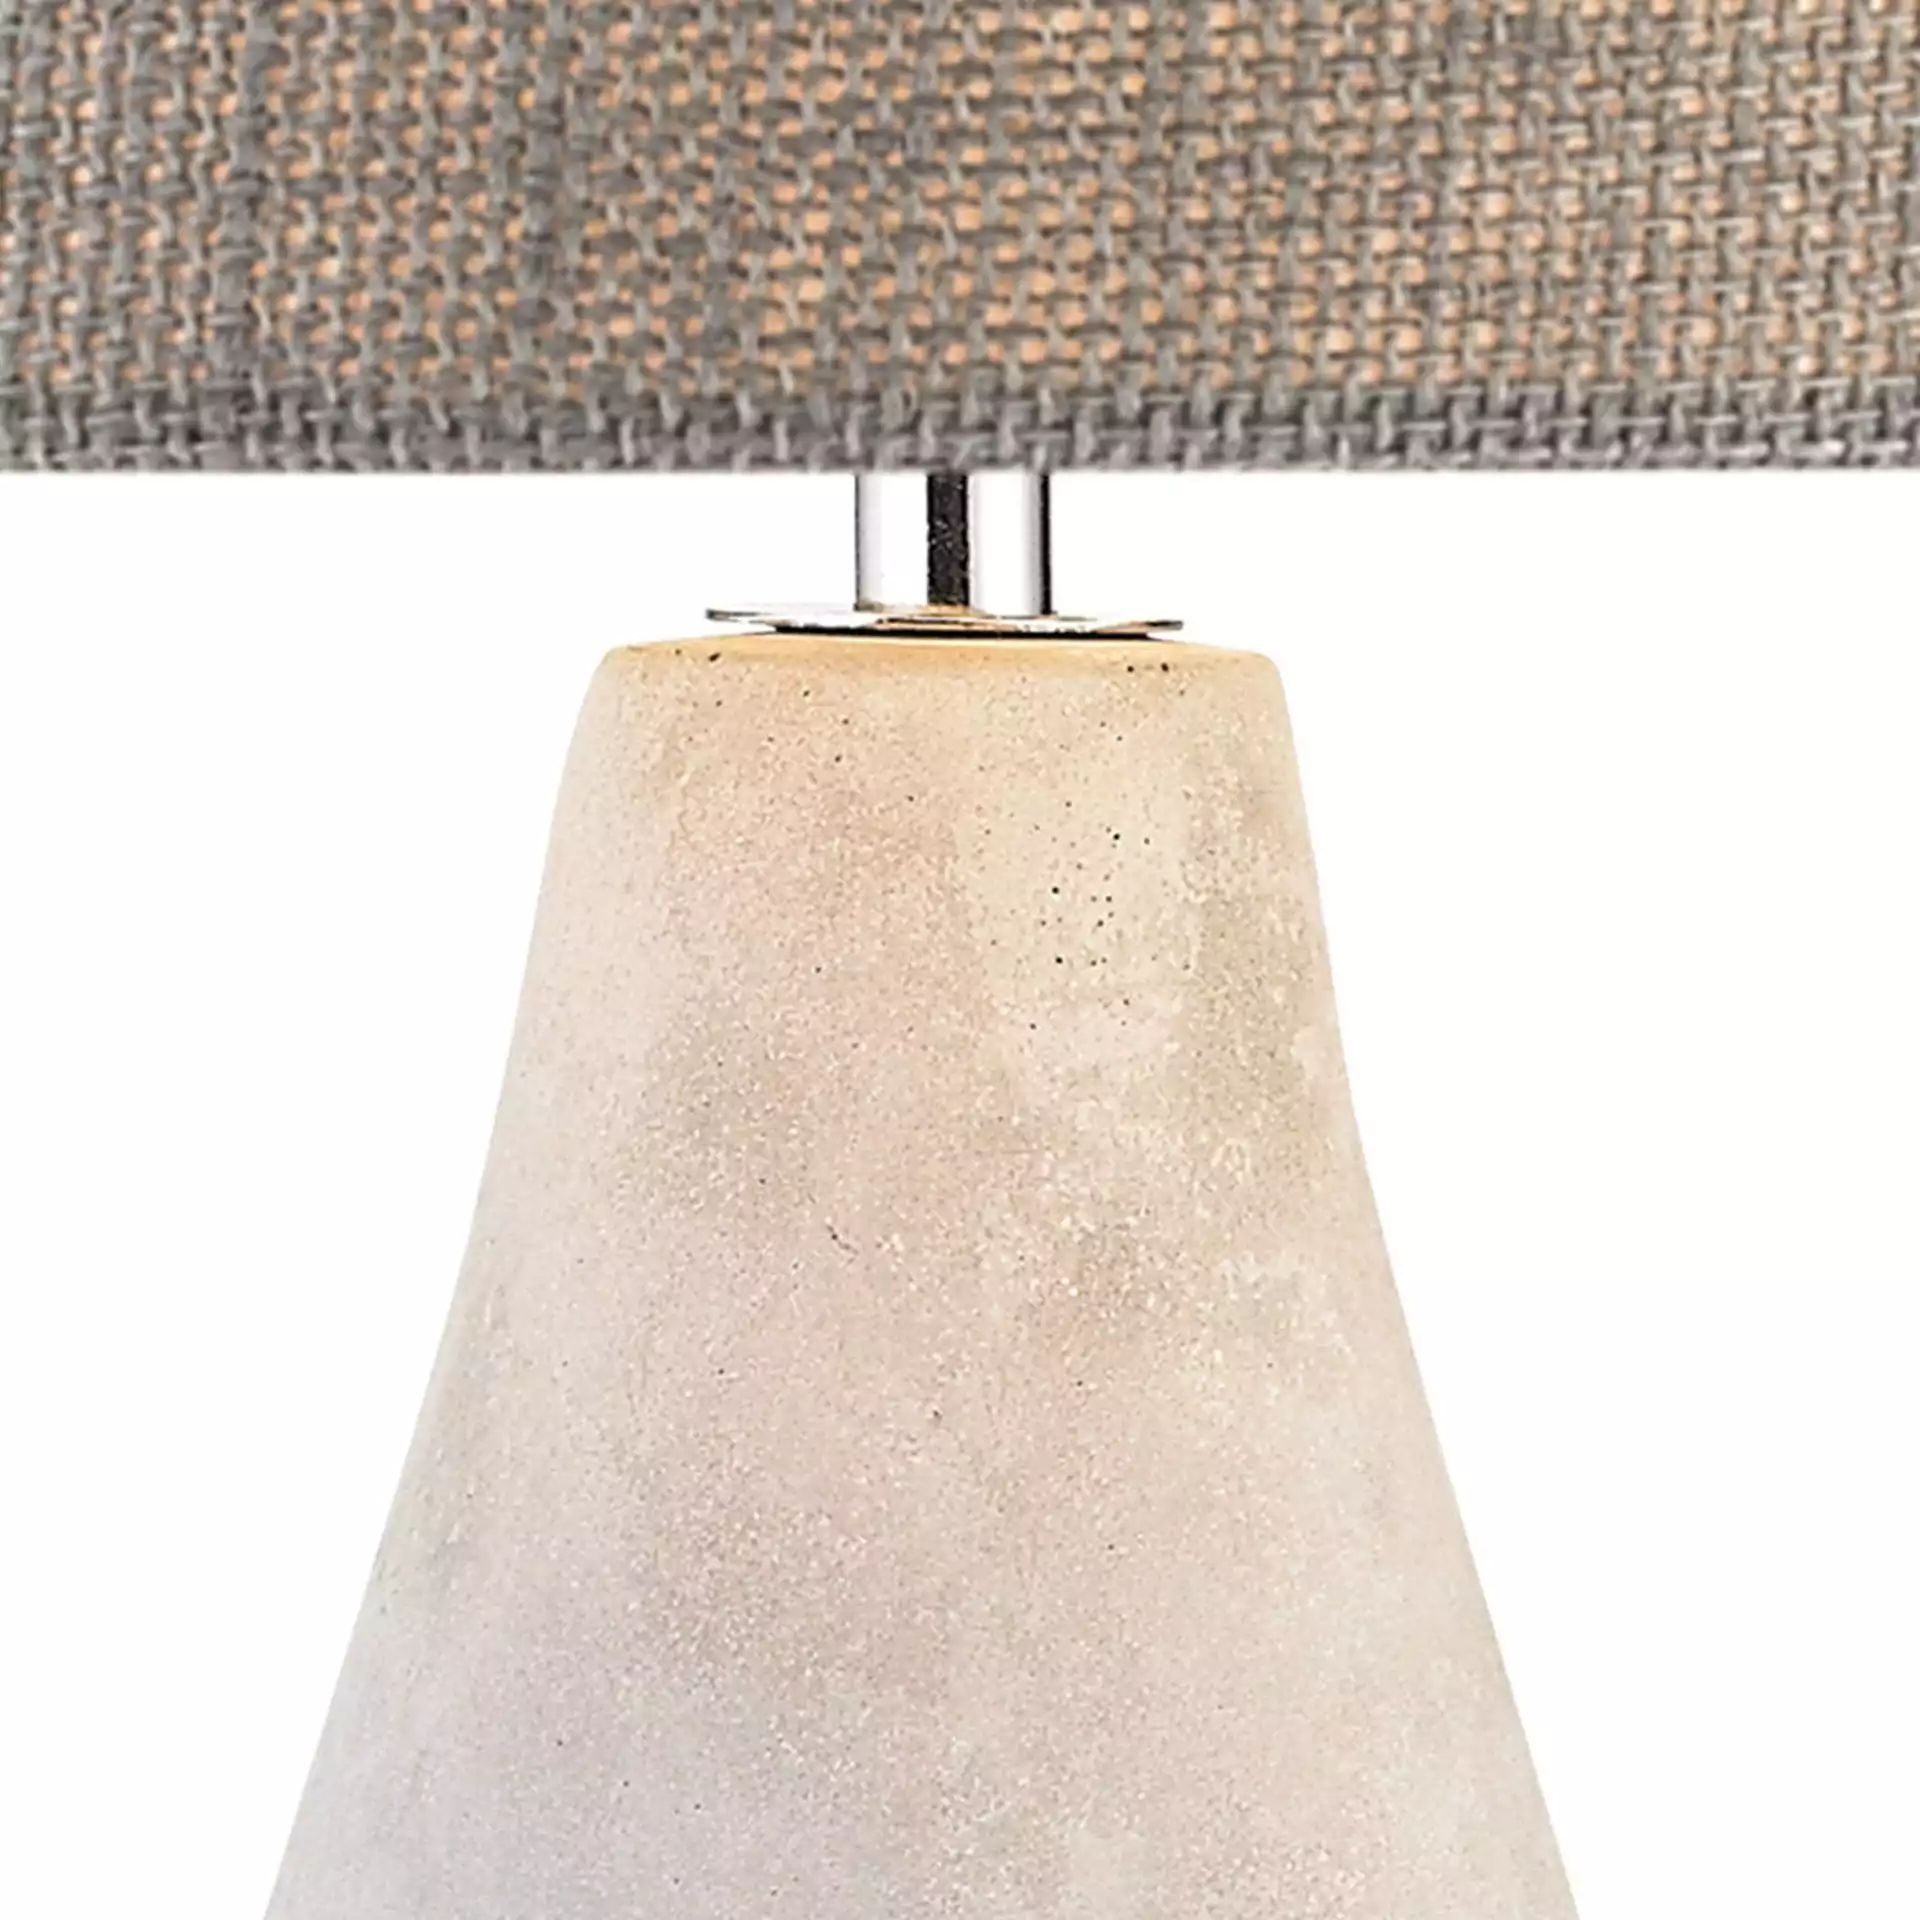 Rockport Light Table Lamp, Polished Concrete